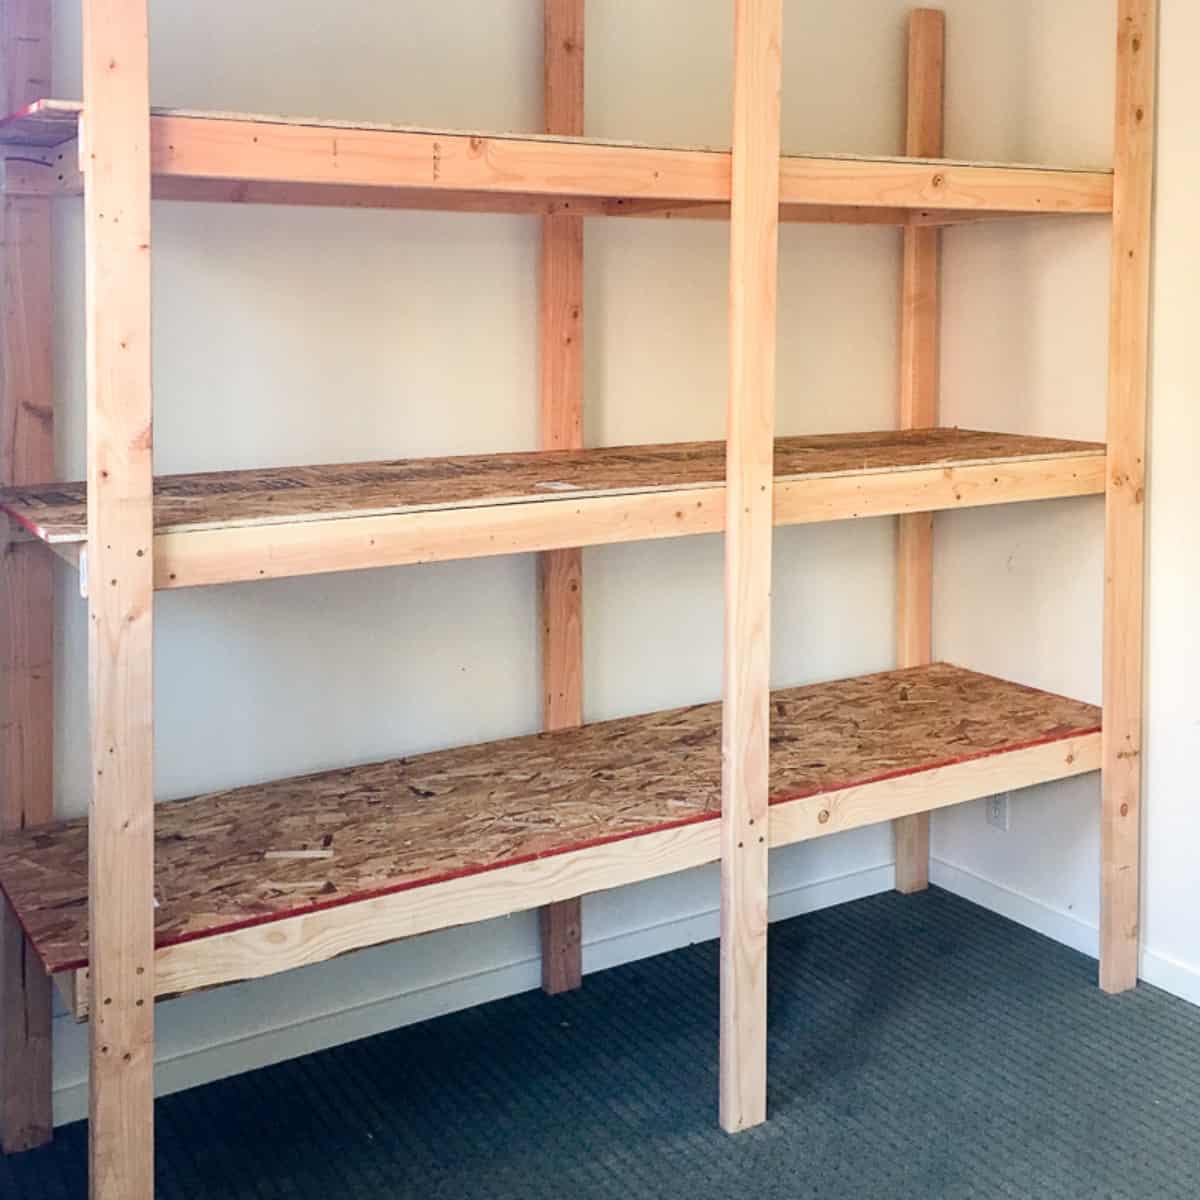 DIY Storage Shelves Plans Garage Storage Plans DIY Woodworking